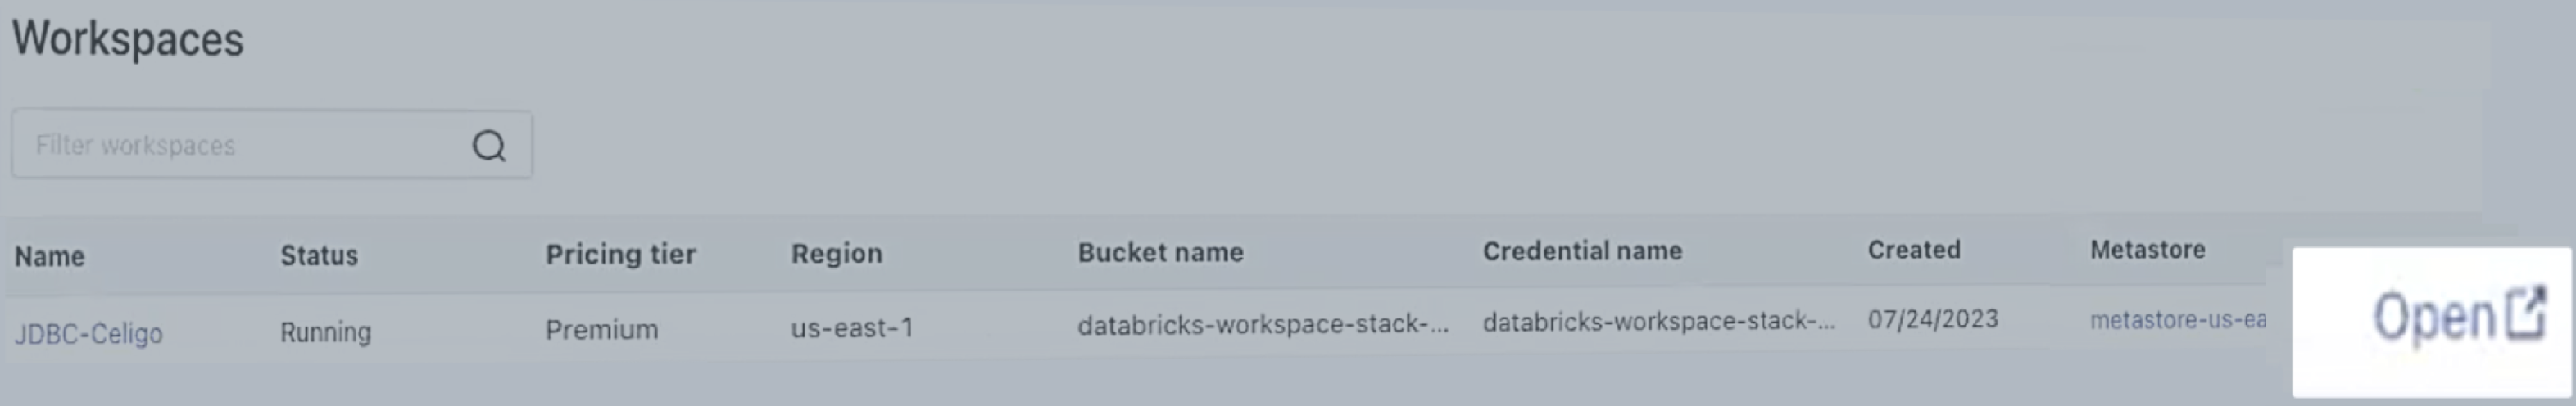 Databricks-workspace-updated.png